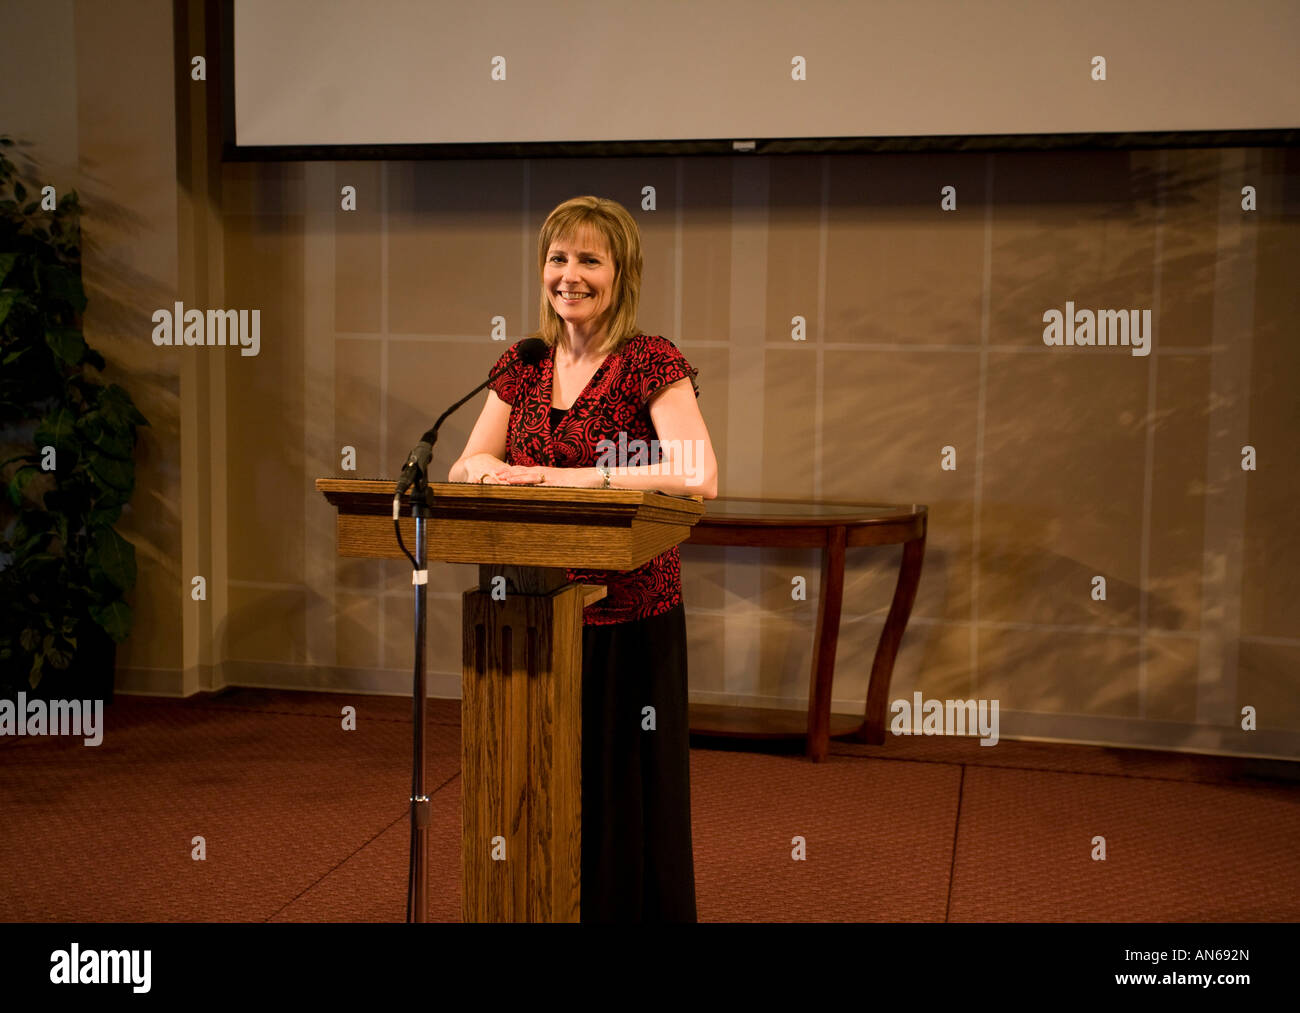 A woman giving a speech Stock Photo